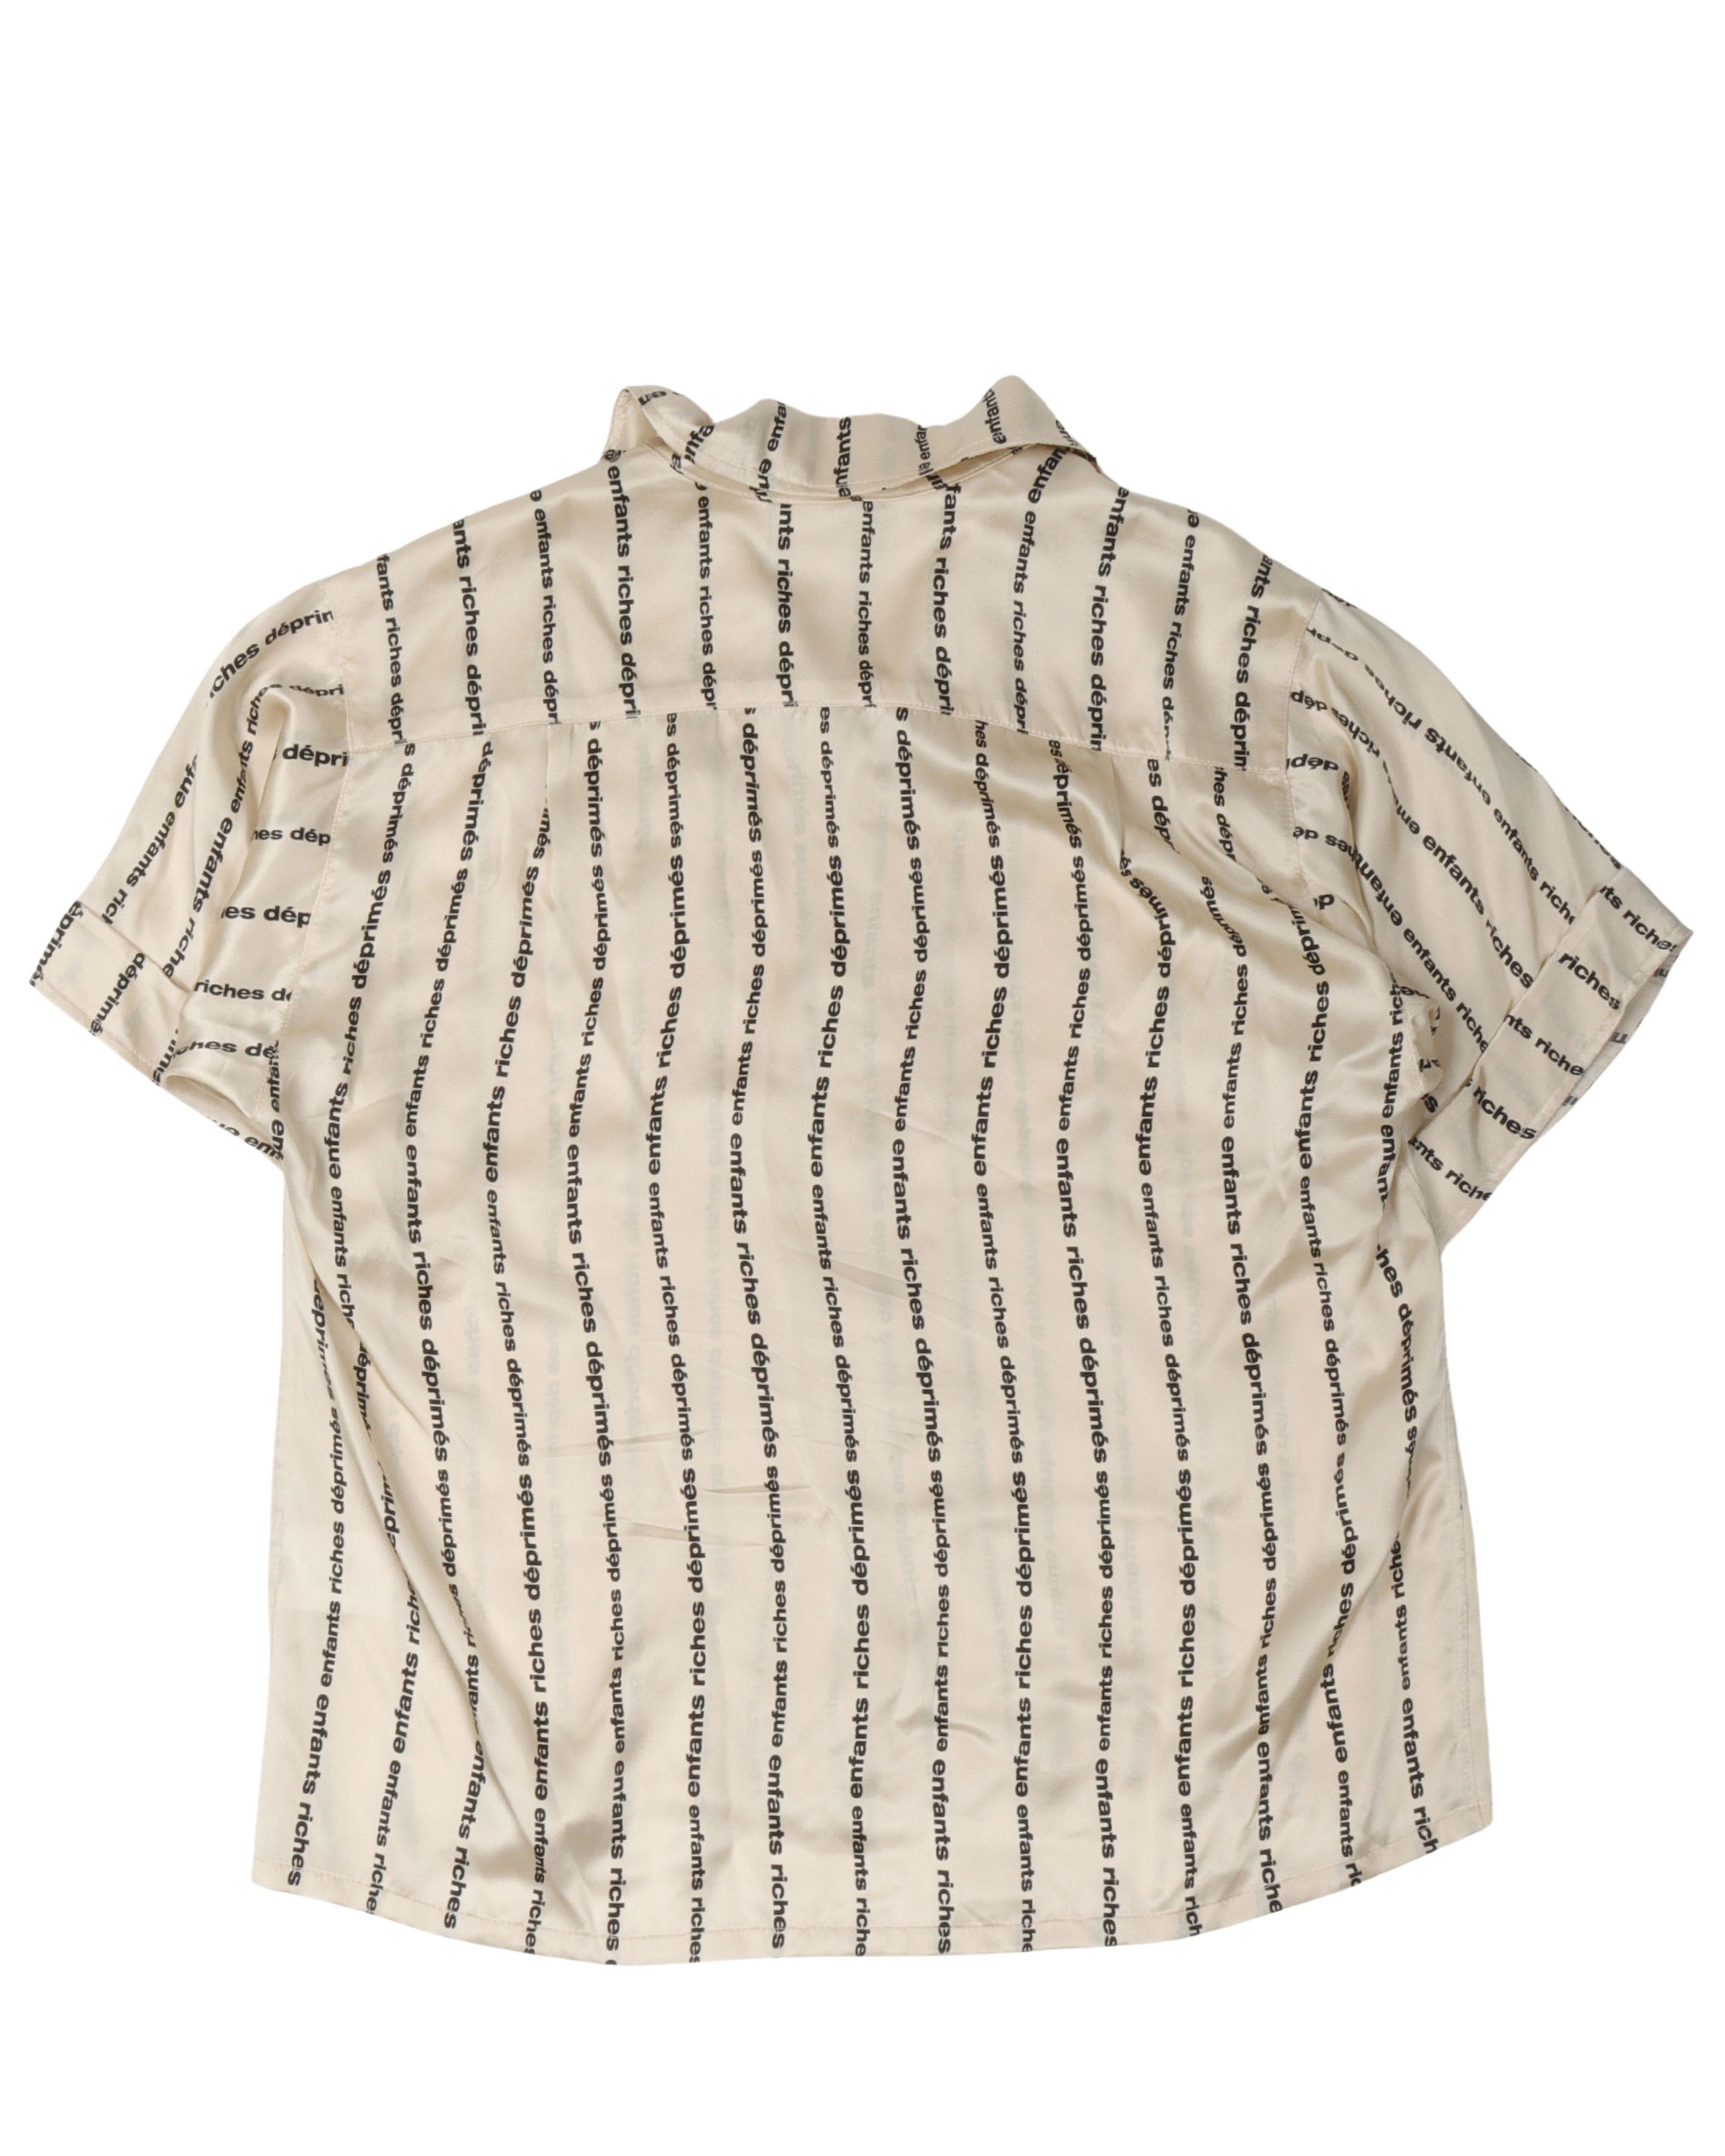 Striped Silk Shirt